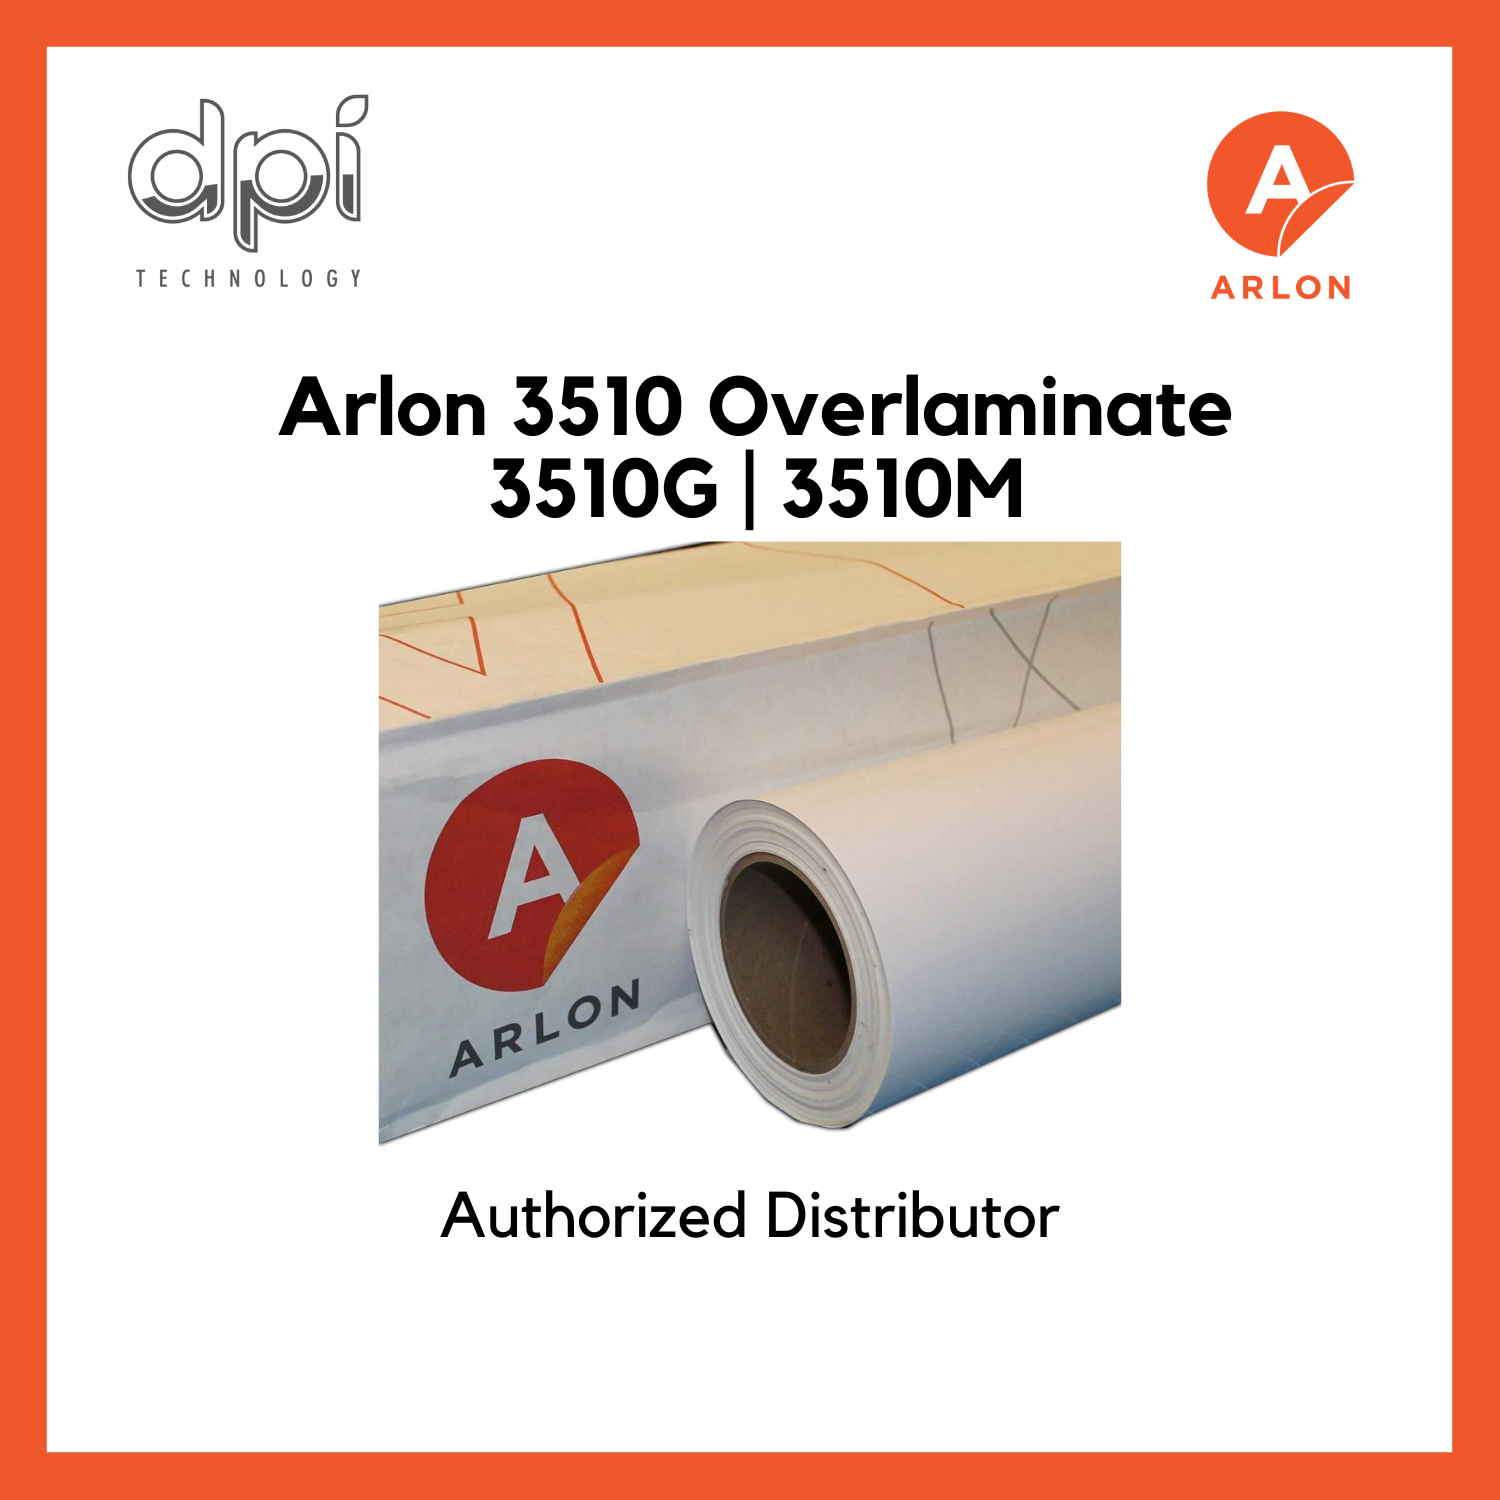 Arlon 3510 Series Overlaminate